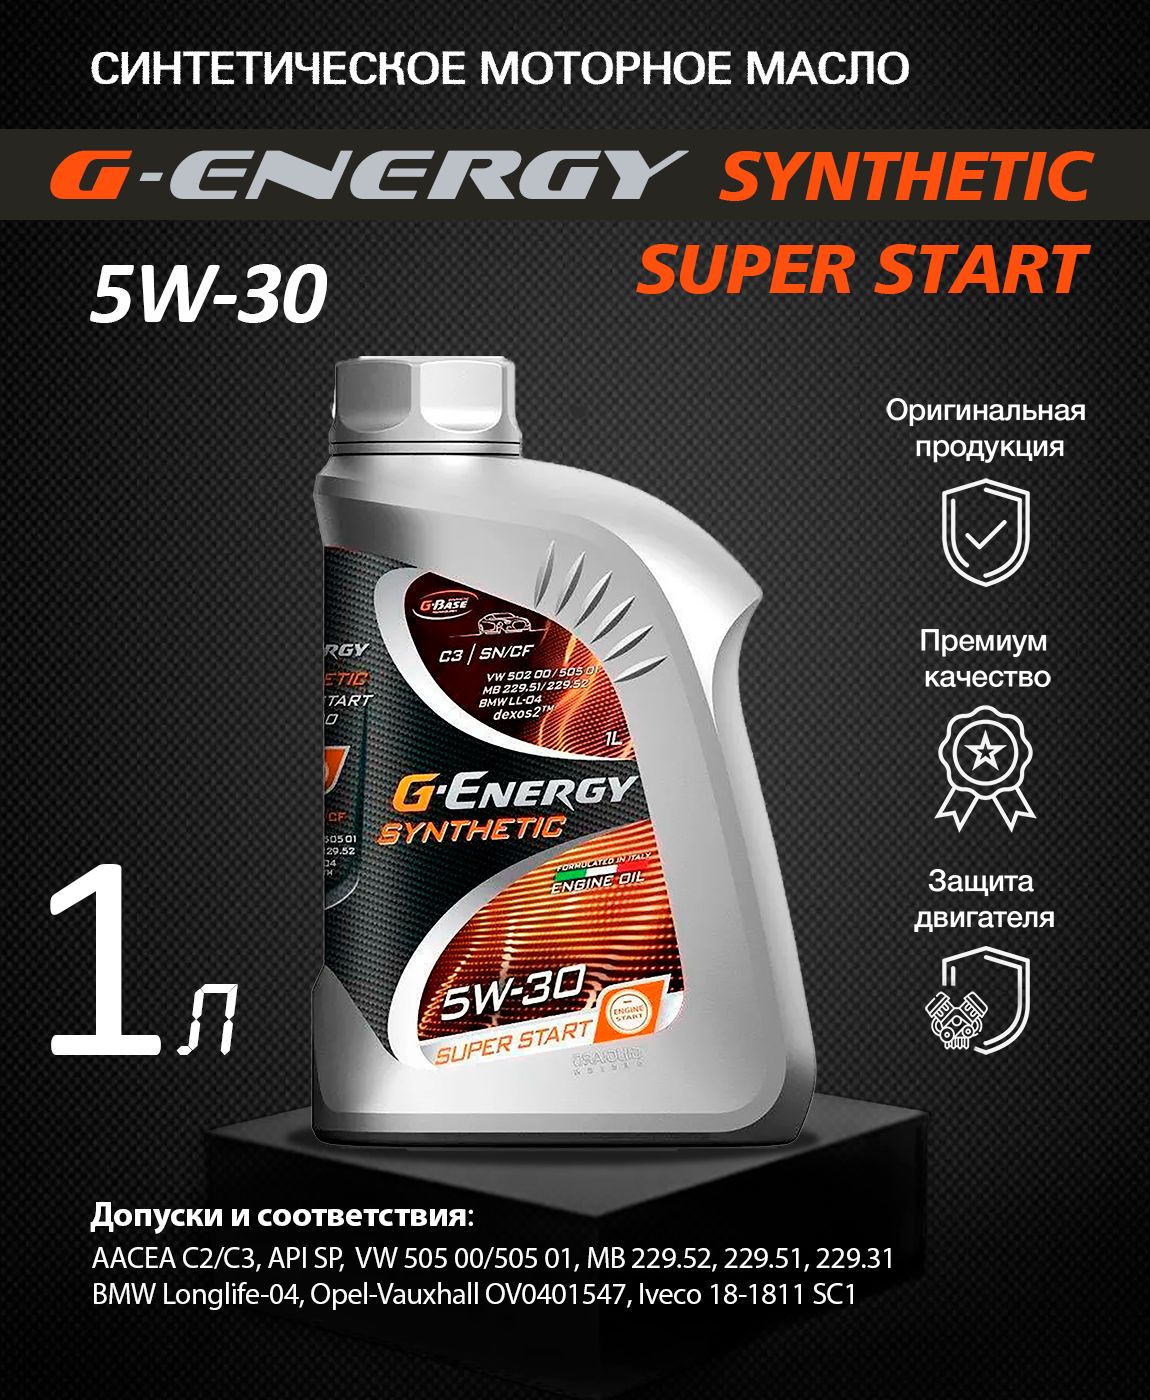 Актив 5 30. G Energy 5w40 Актив. G-Energy Synthetic Active 5w-30. G-Energy Synthetic Active 5w-40. Масло g-Energy Synthetic super start 5w-30.